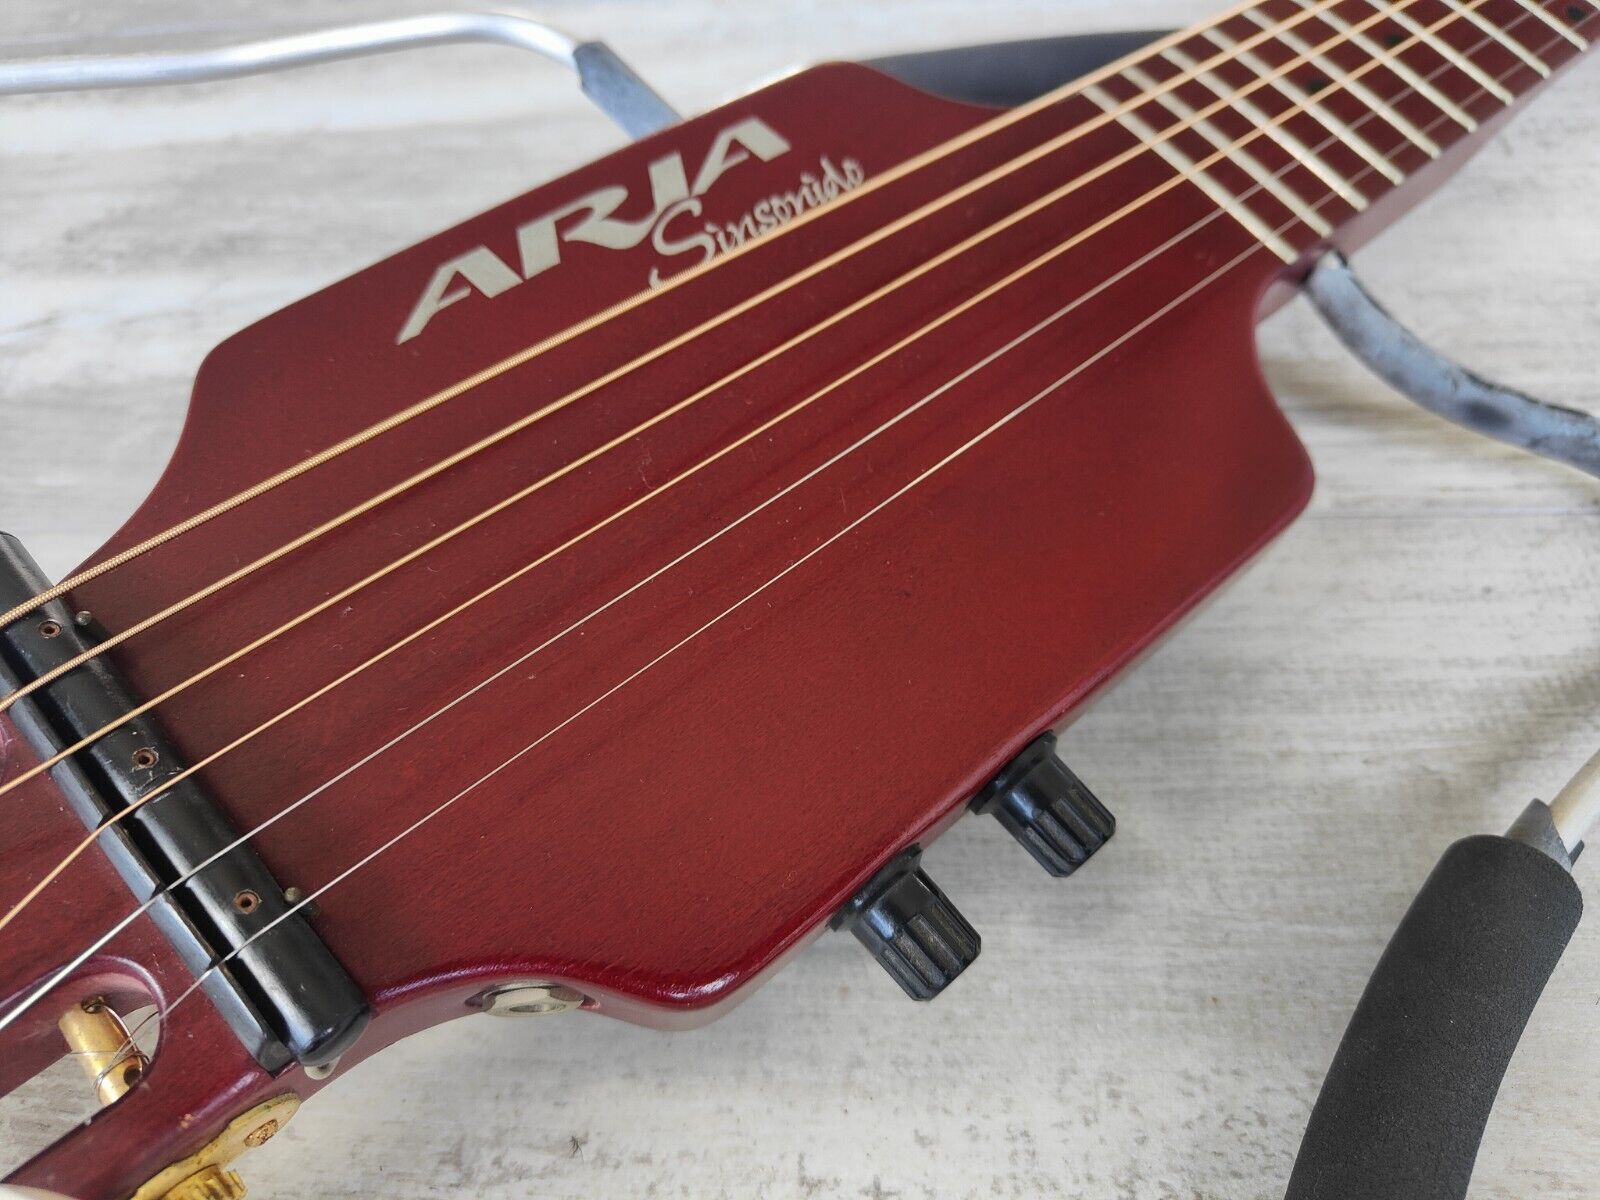 2002 Aria Sinsonido Solo Ette Silent Acoustic Guitar (Red)